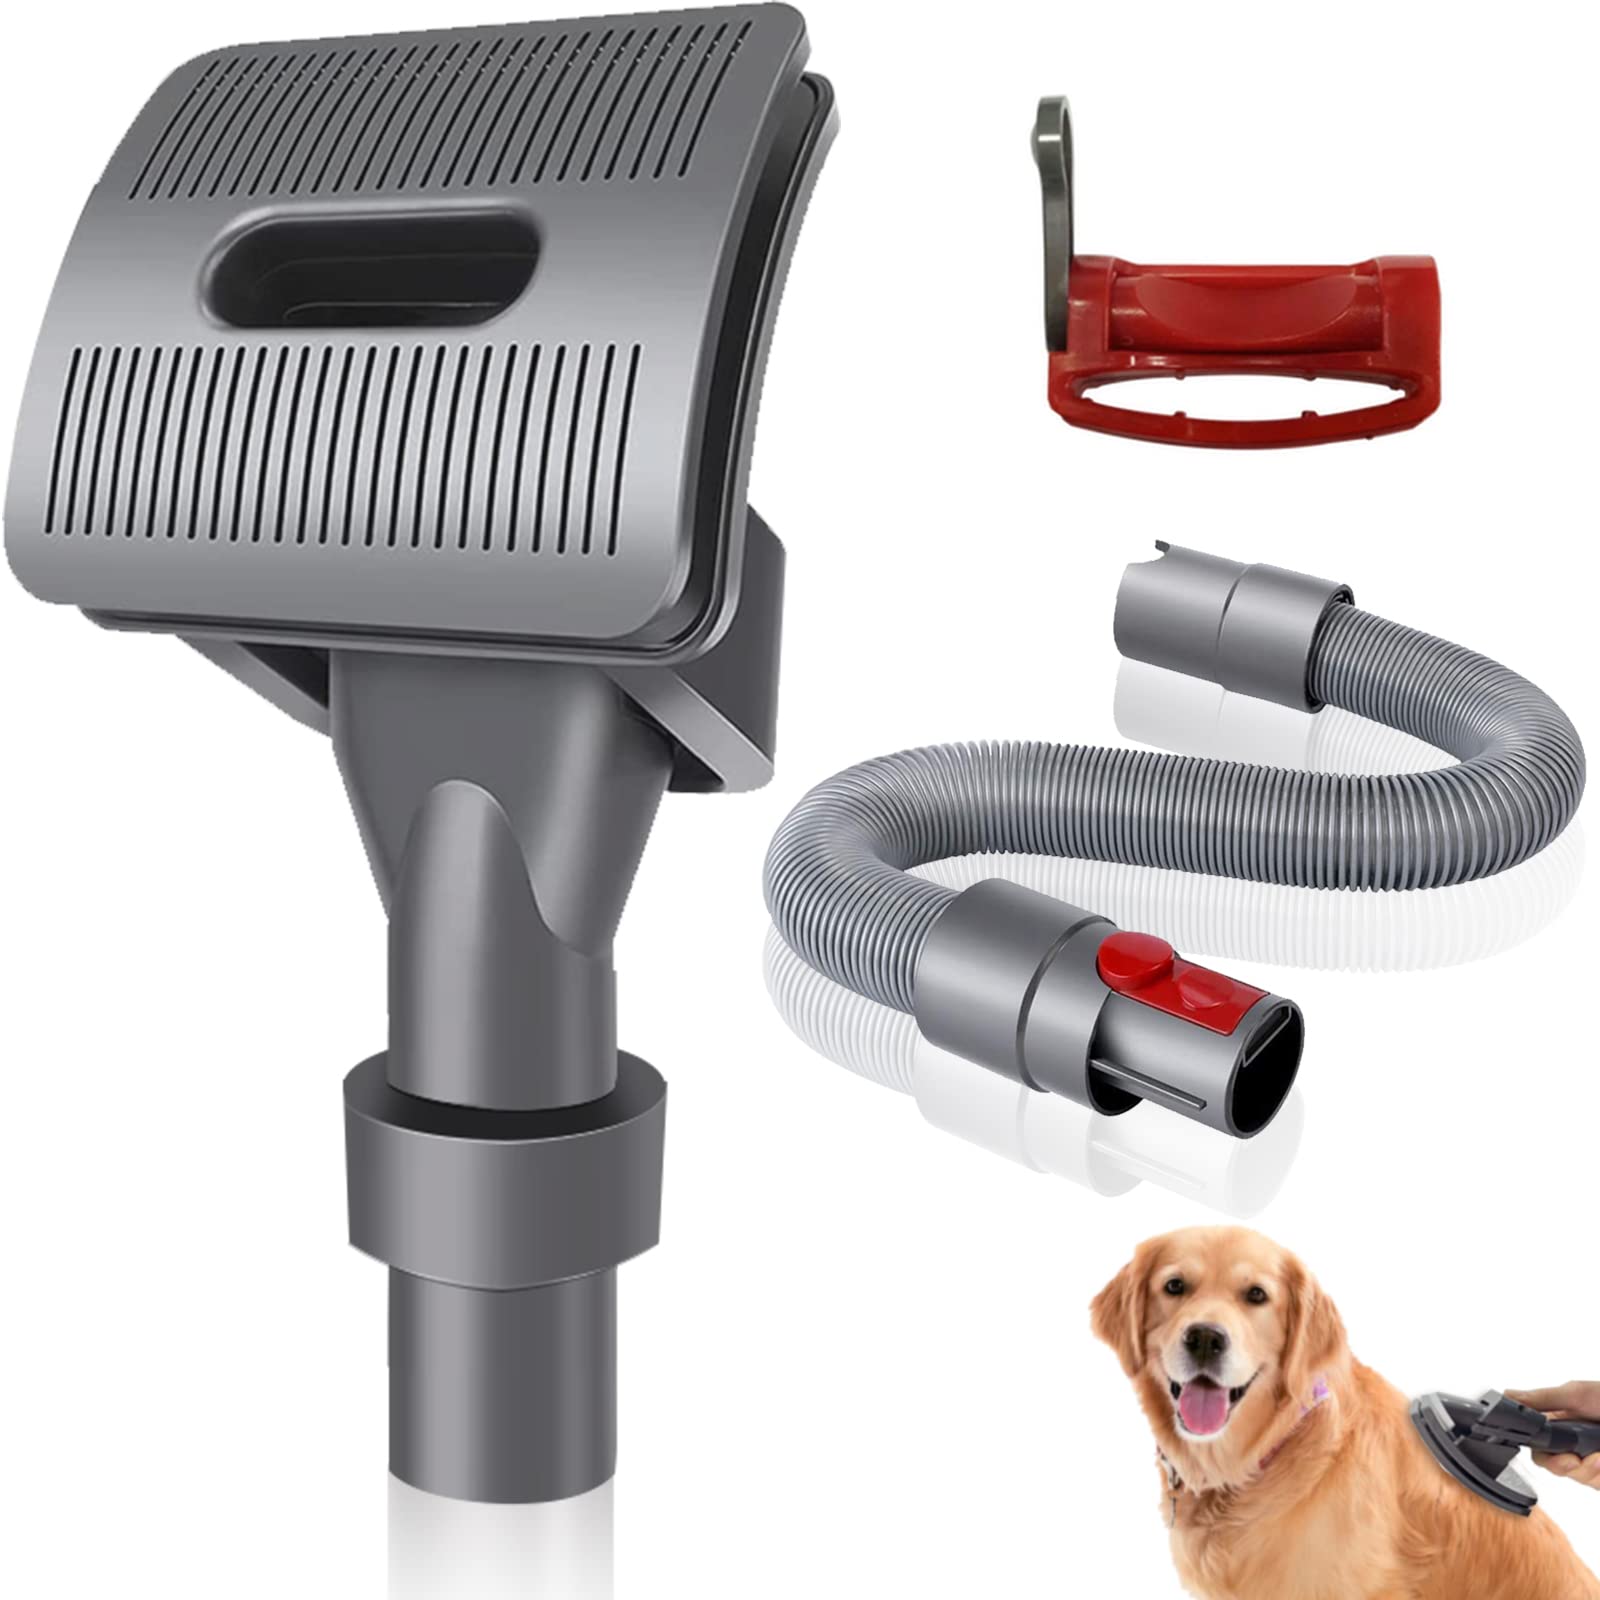 TPDL Groom Tool for Dyson Pet dog Attachment Brush, Compatible with Dyson V15 V12 V11 V10 V8 V7 DC62 DC65 Vacuum Cleaners, with Extended Vacuum Hose & Trigger Lock